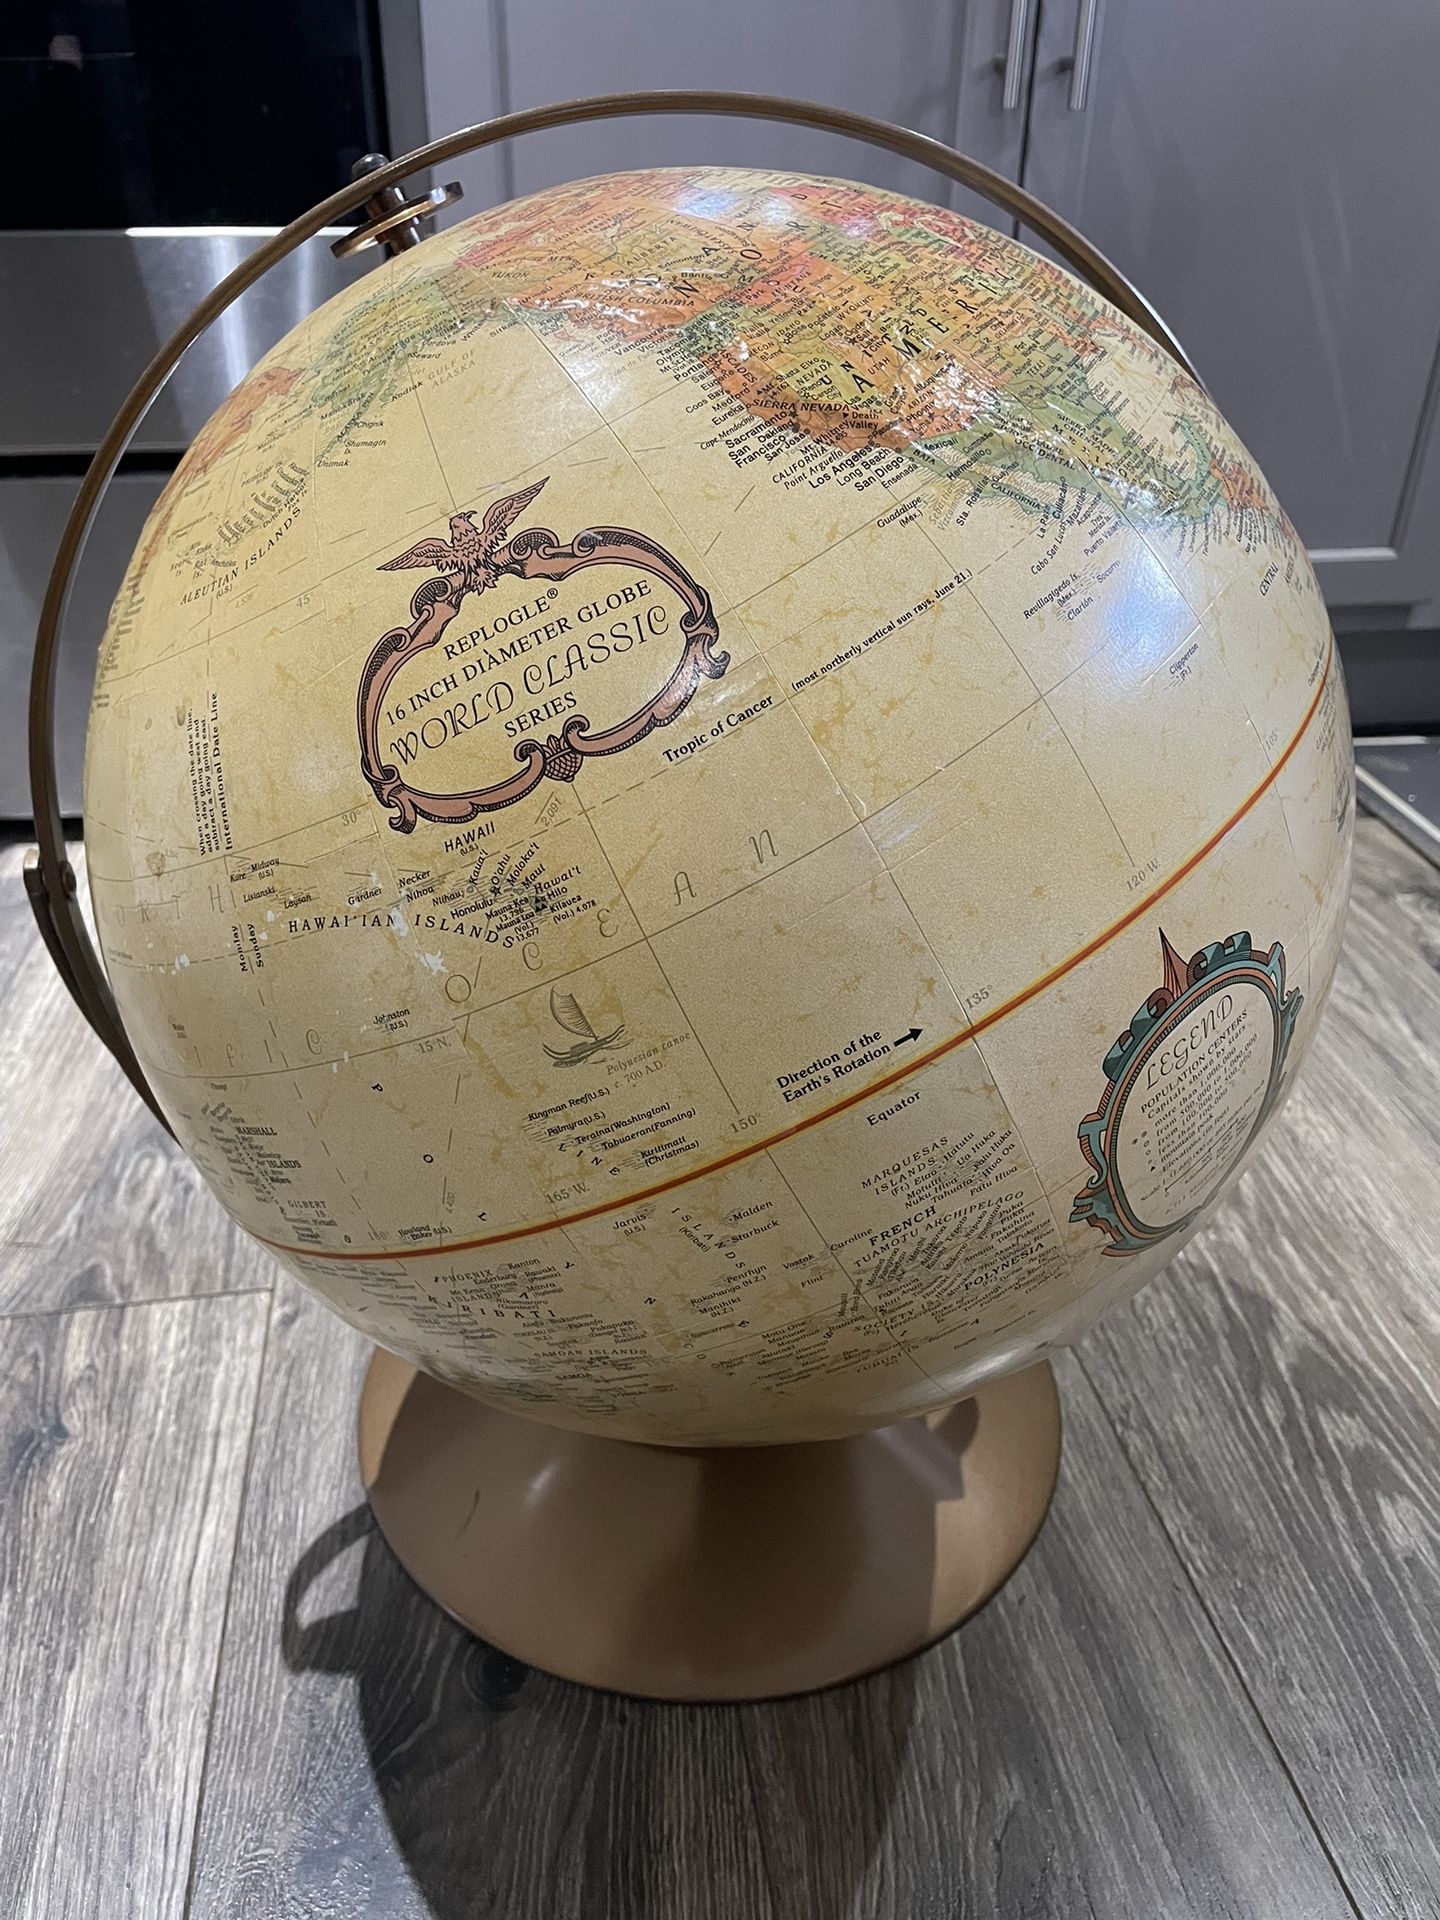 World Globe 